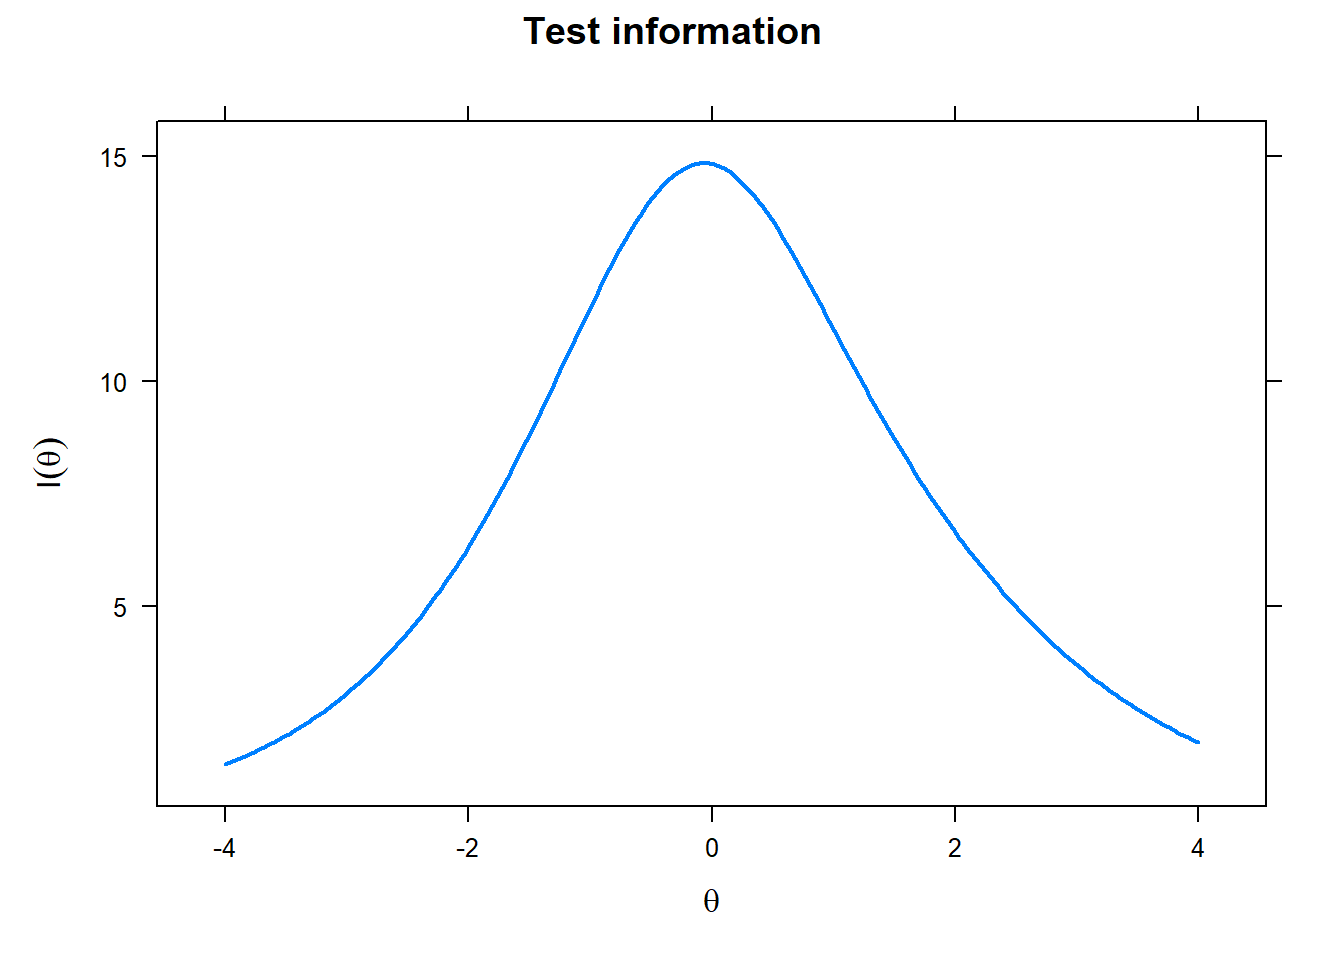 Test information curve: Artistic